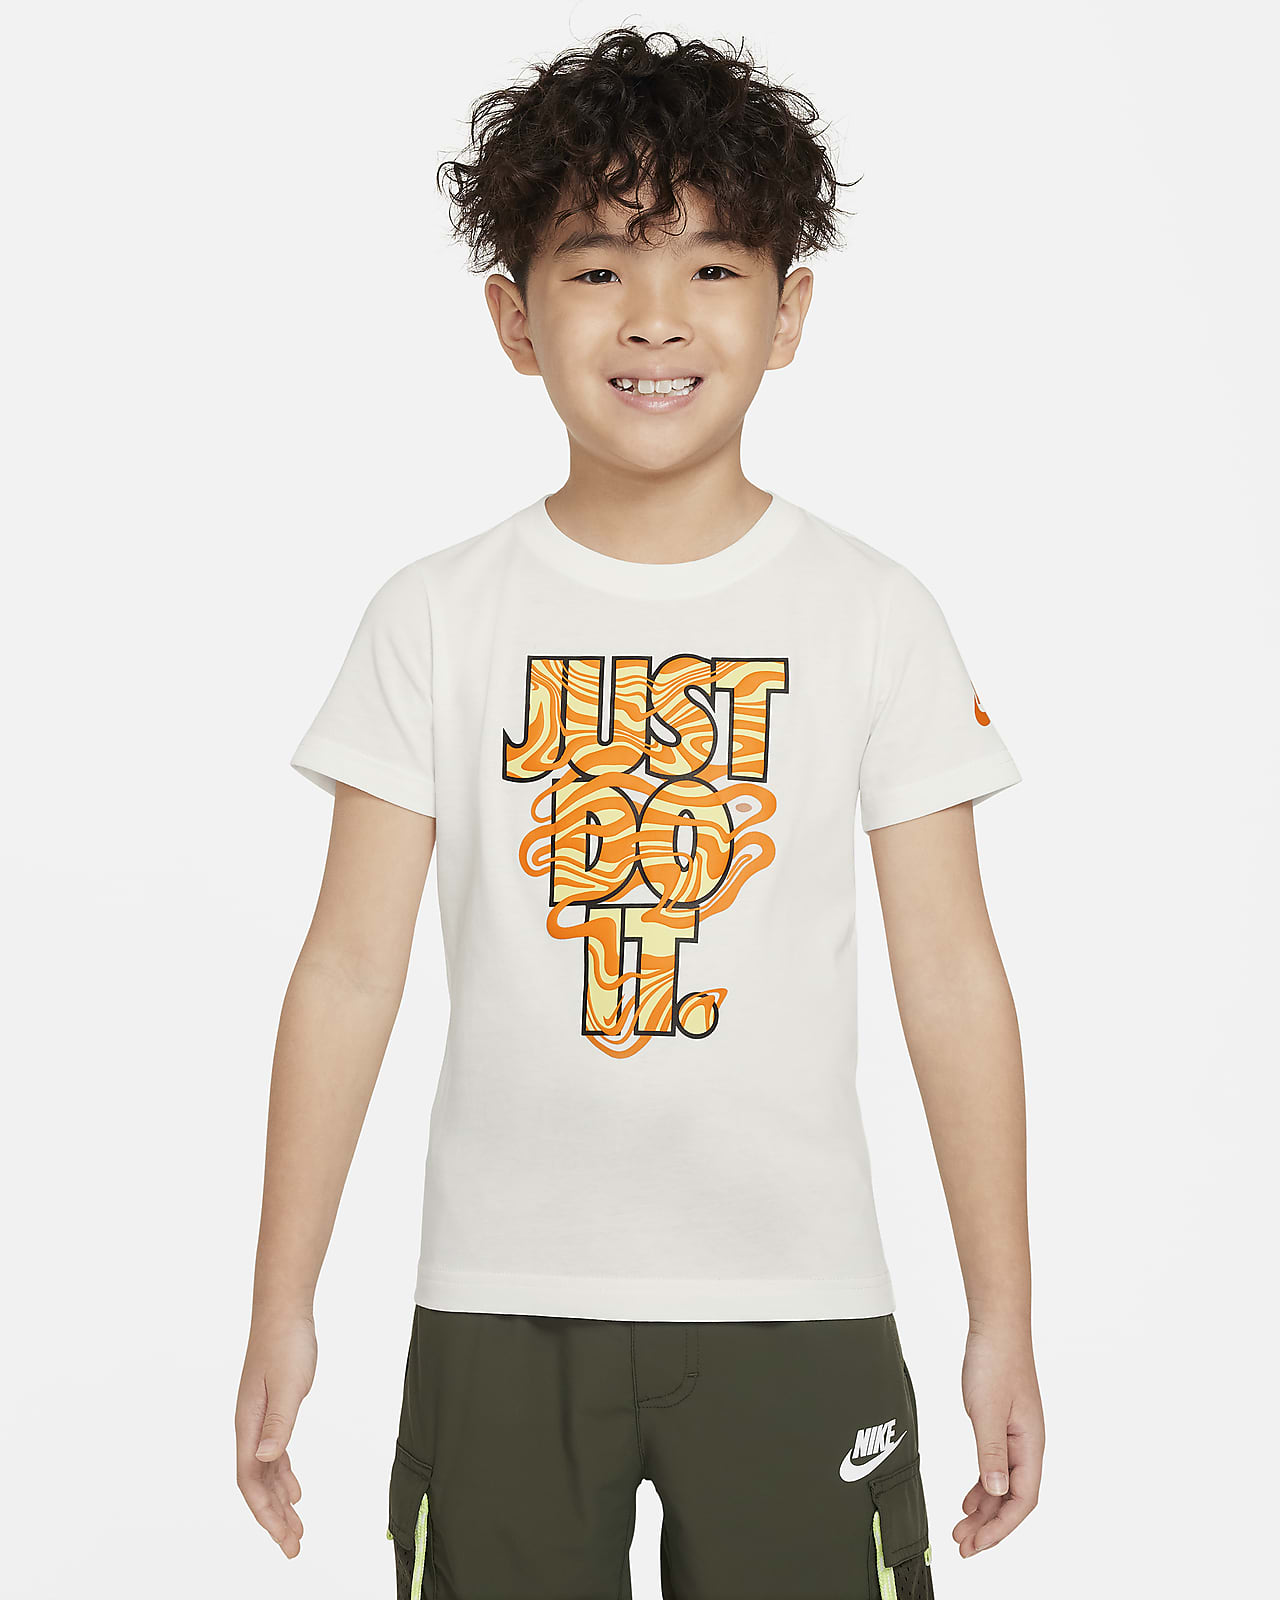 Playera estampada para niños de preescolar Nike "Just Do It"